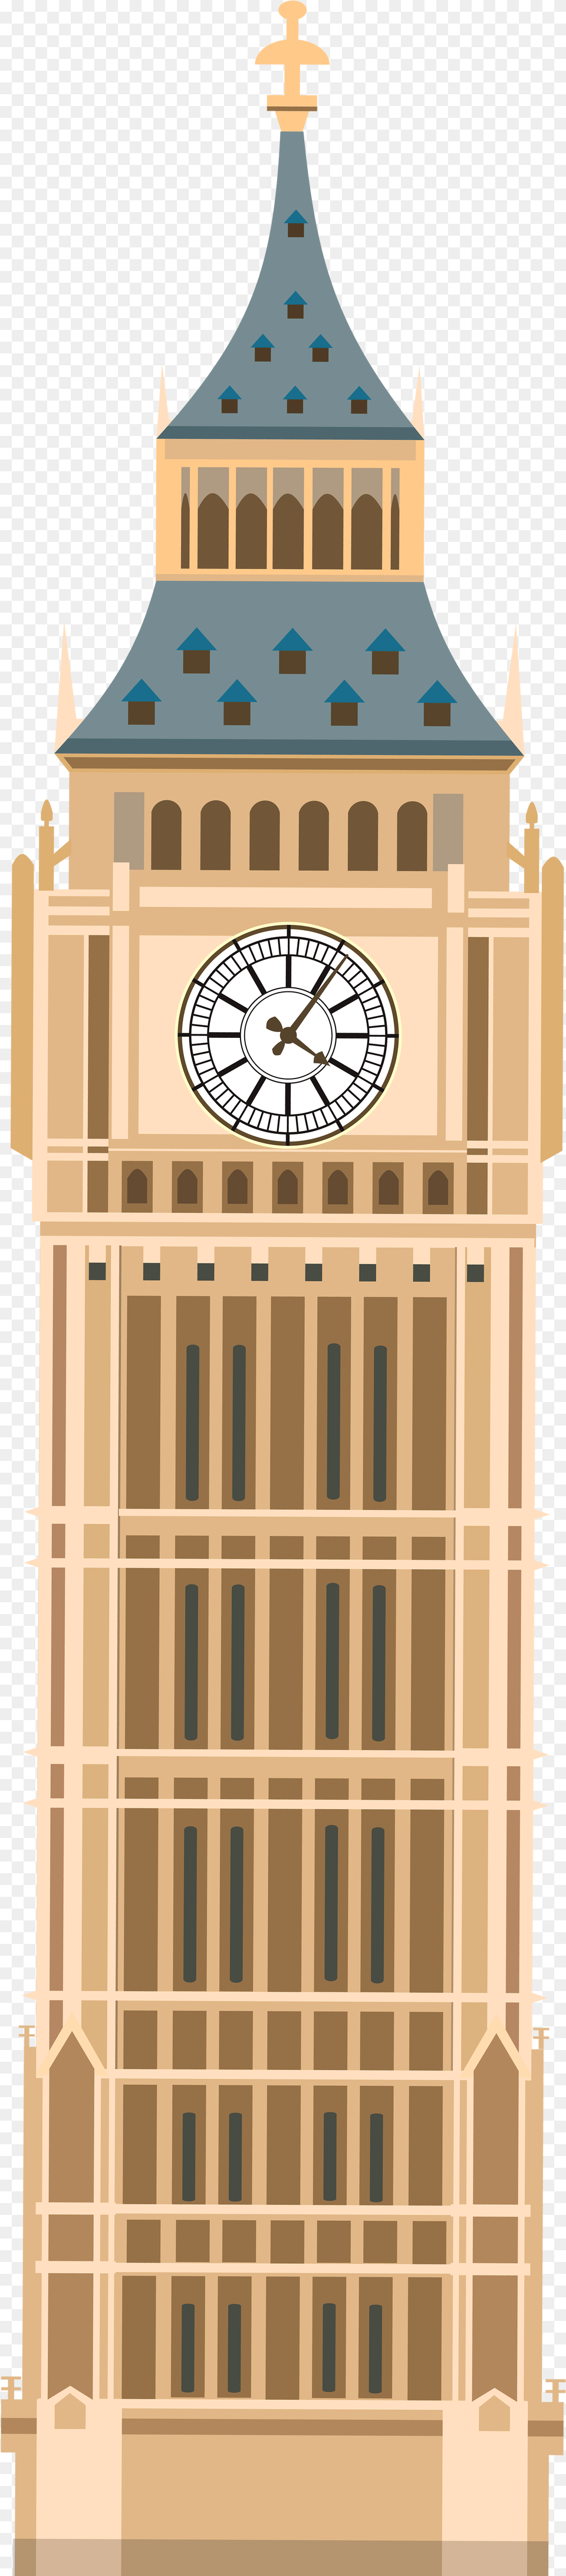 Big Ben Clip Art Big Ben, Architecture, Building, Clock Tower, Tower Png Image